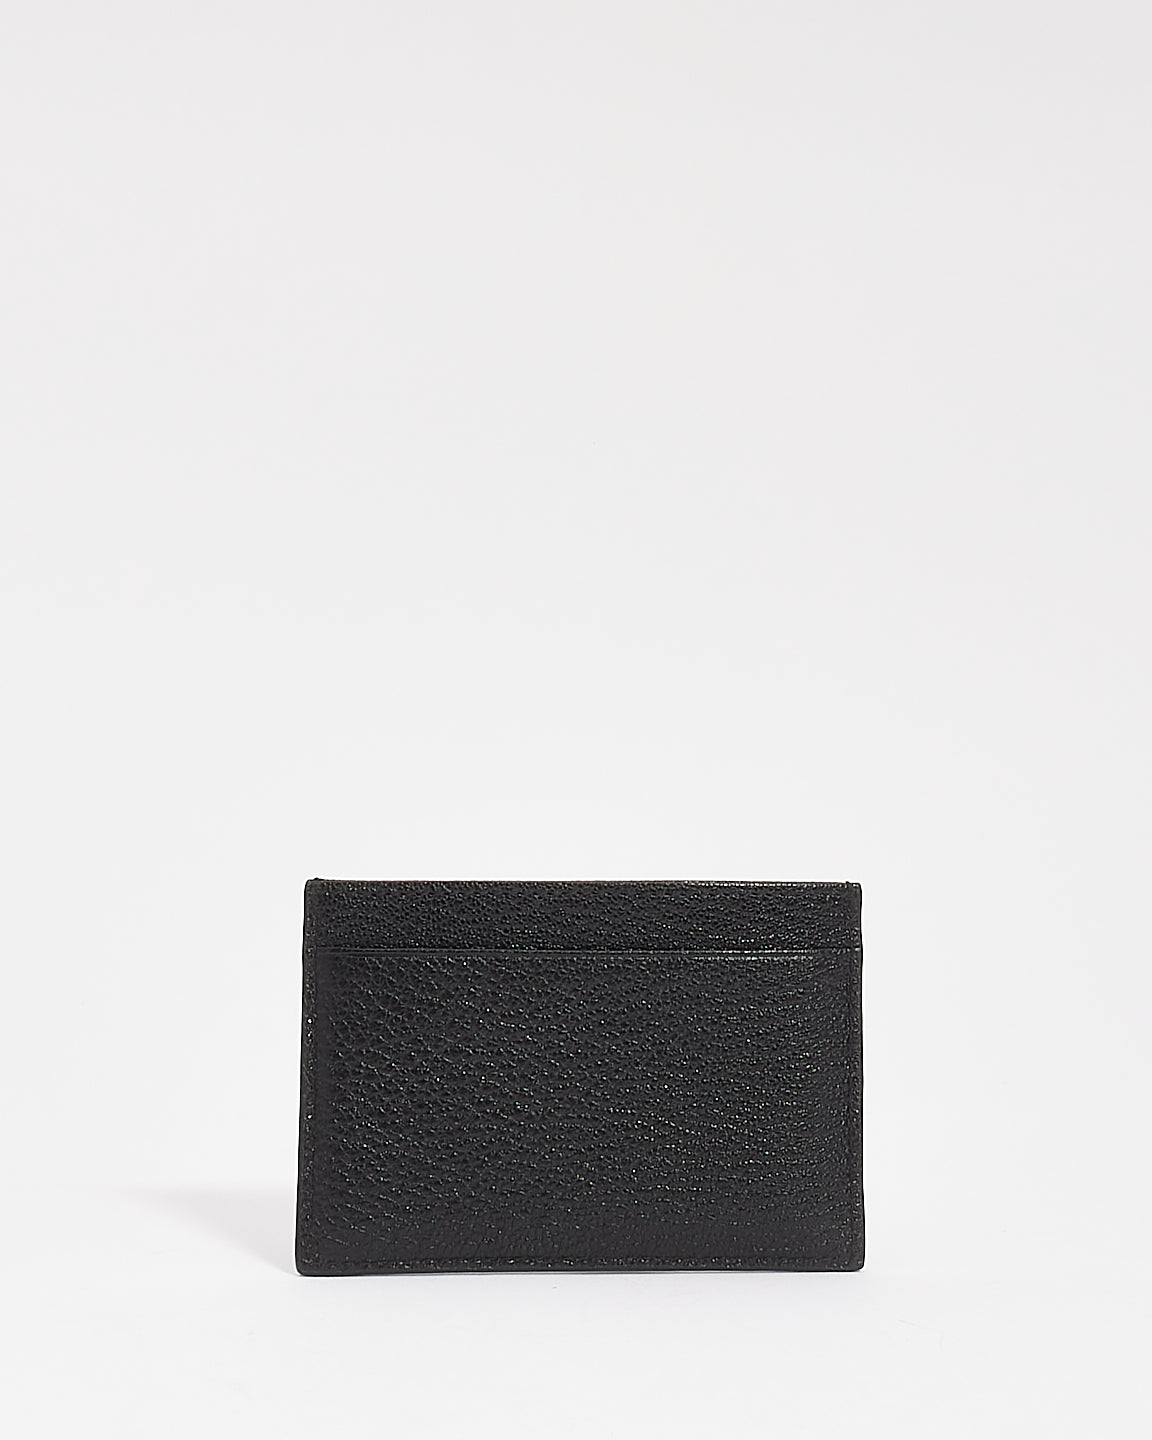 Porte-cartes Miu Miu en cuir noir avec patch chat